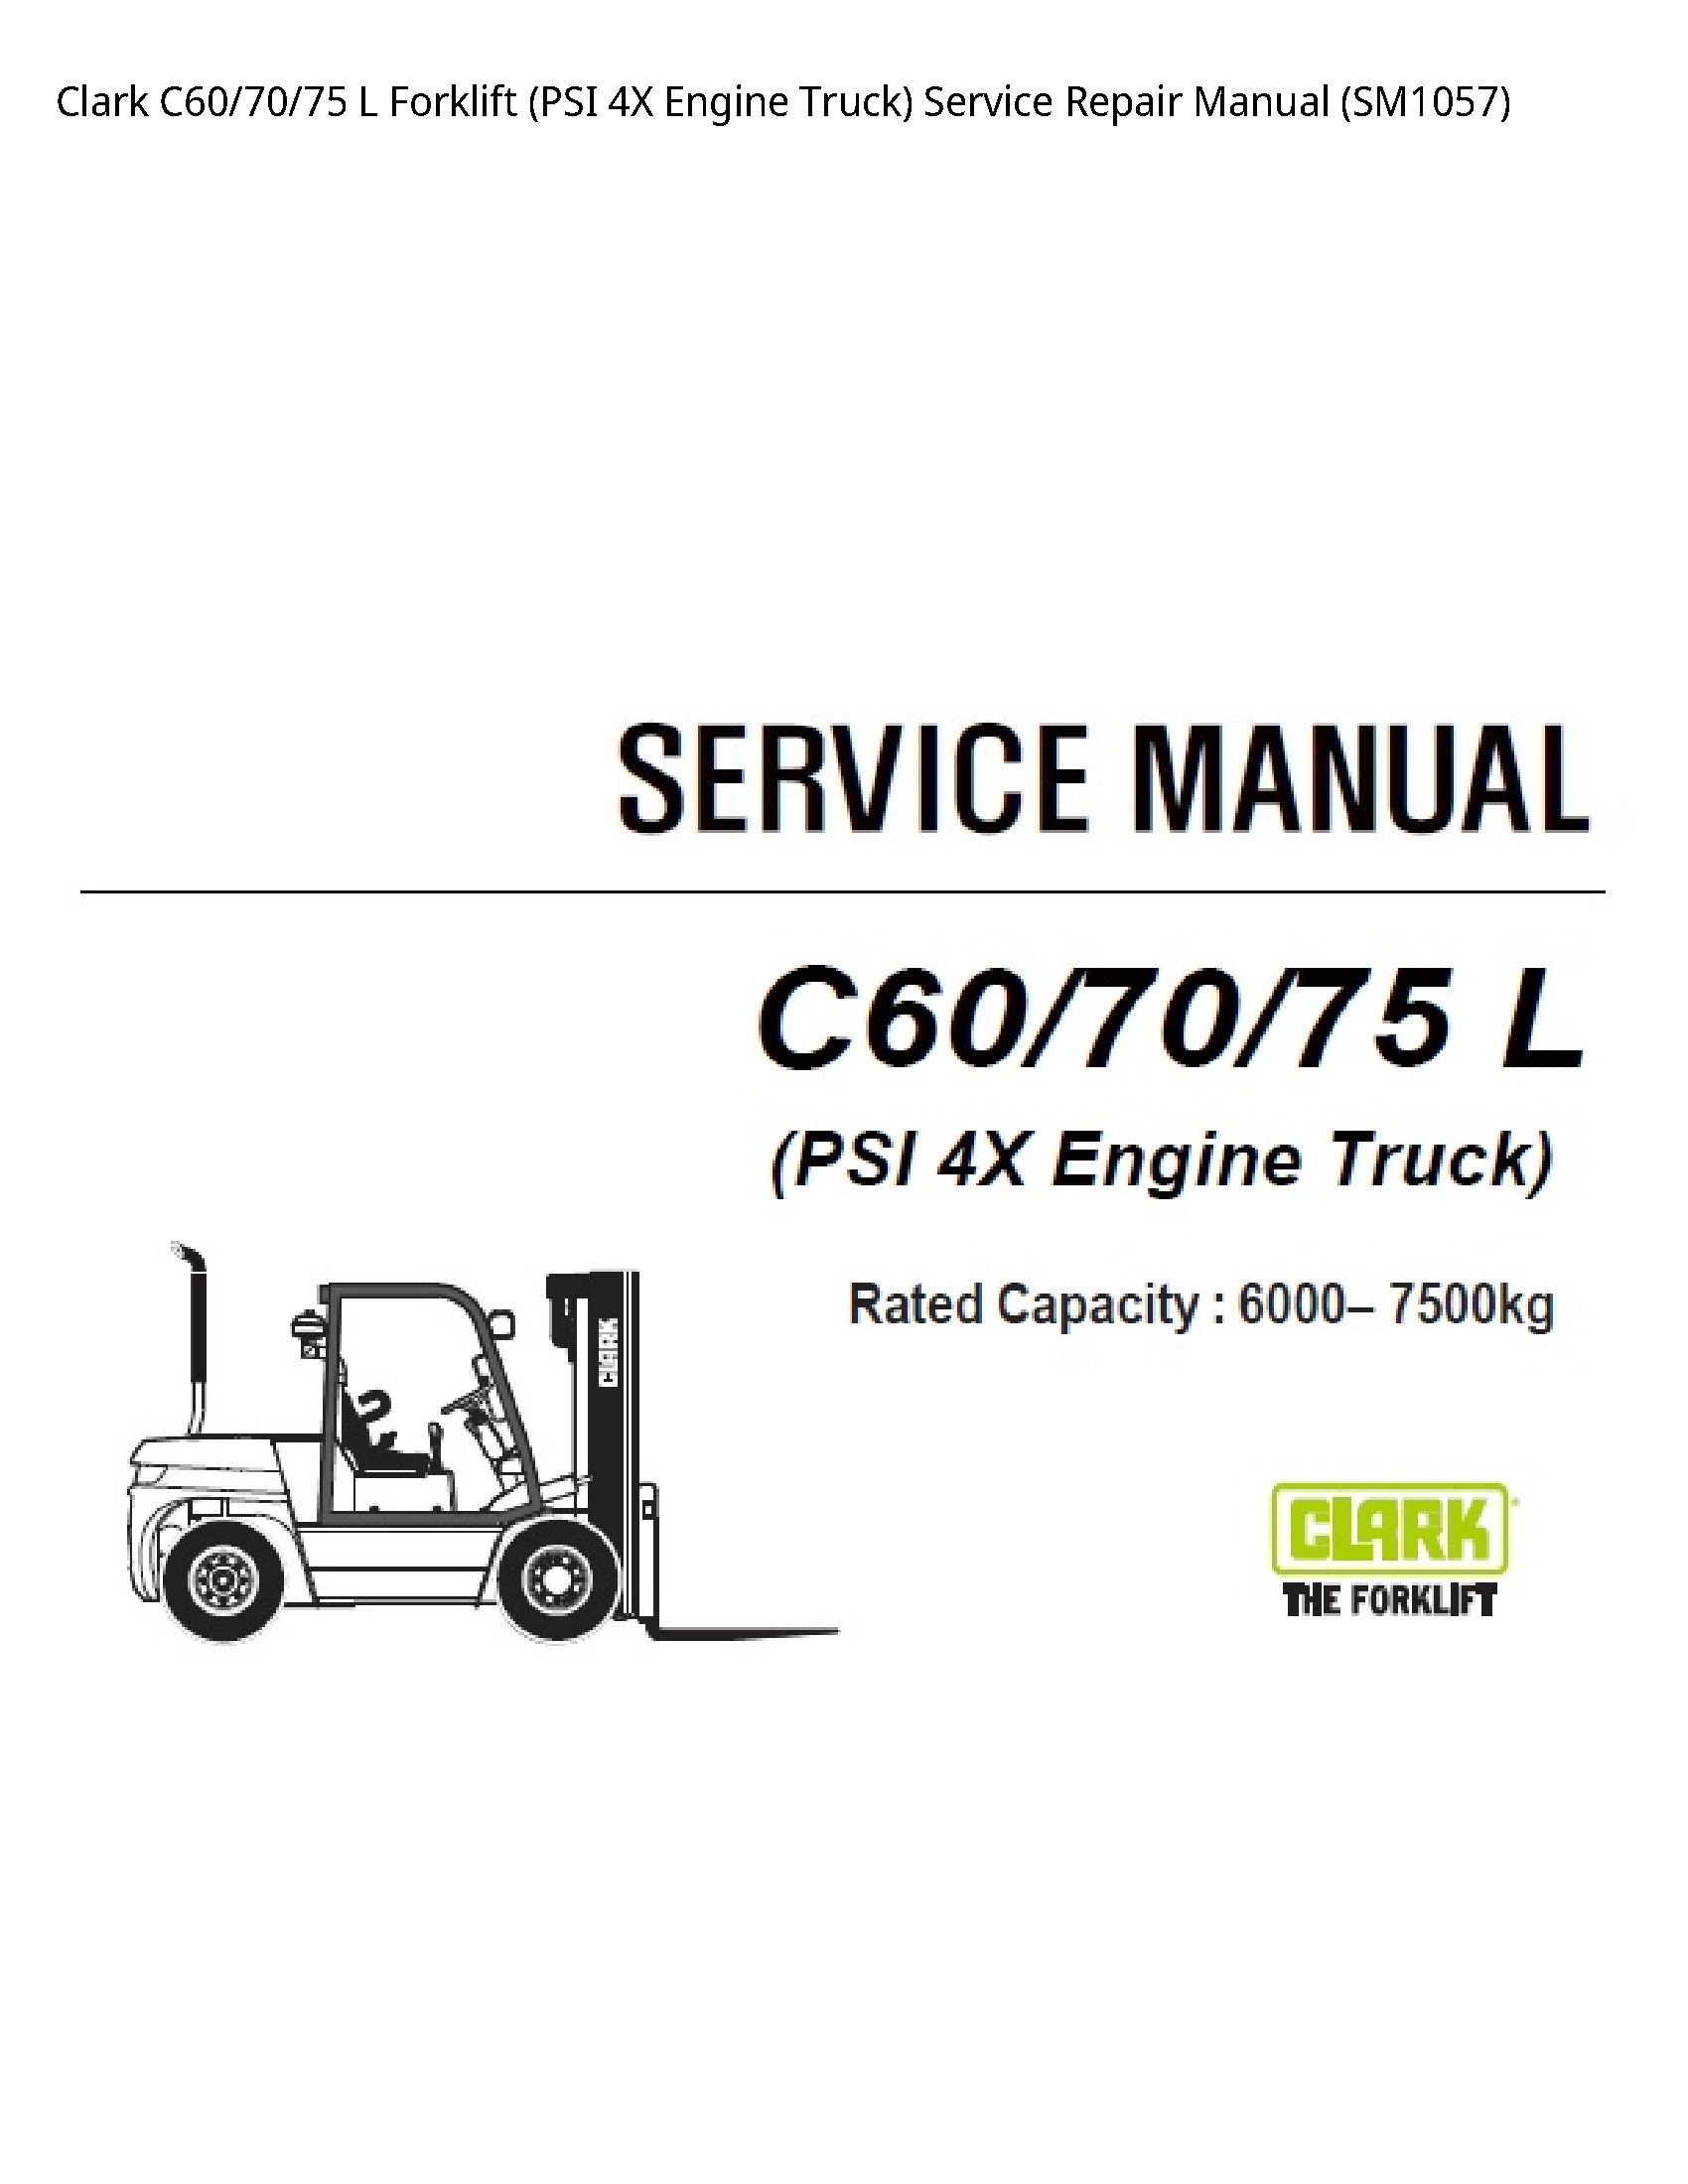 Clark C60 Forklift (PSI Engine Truck) manual